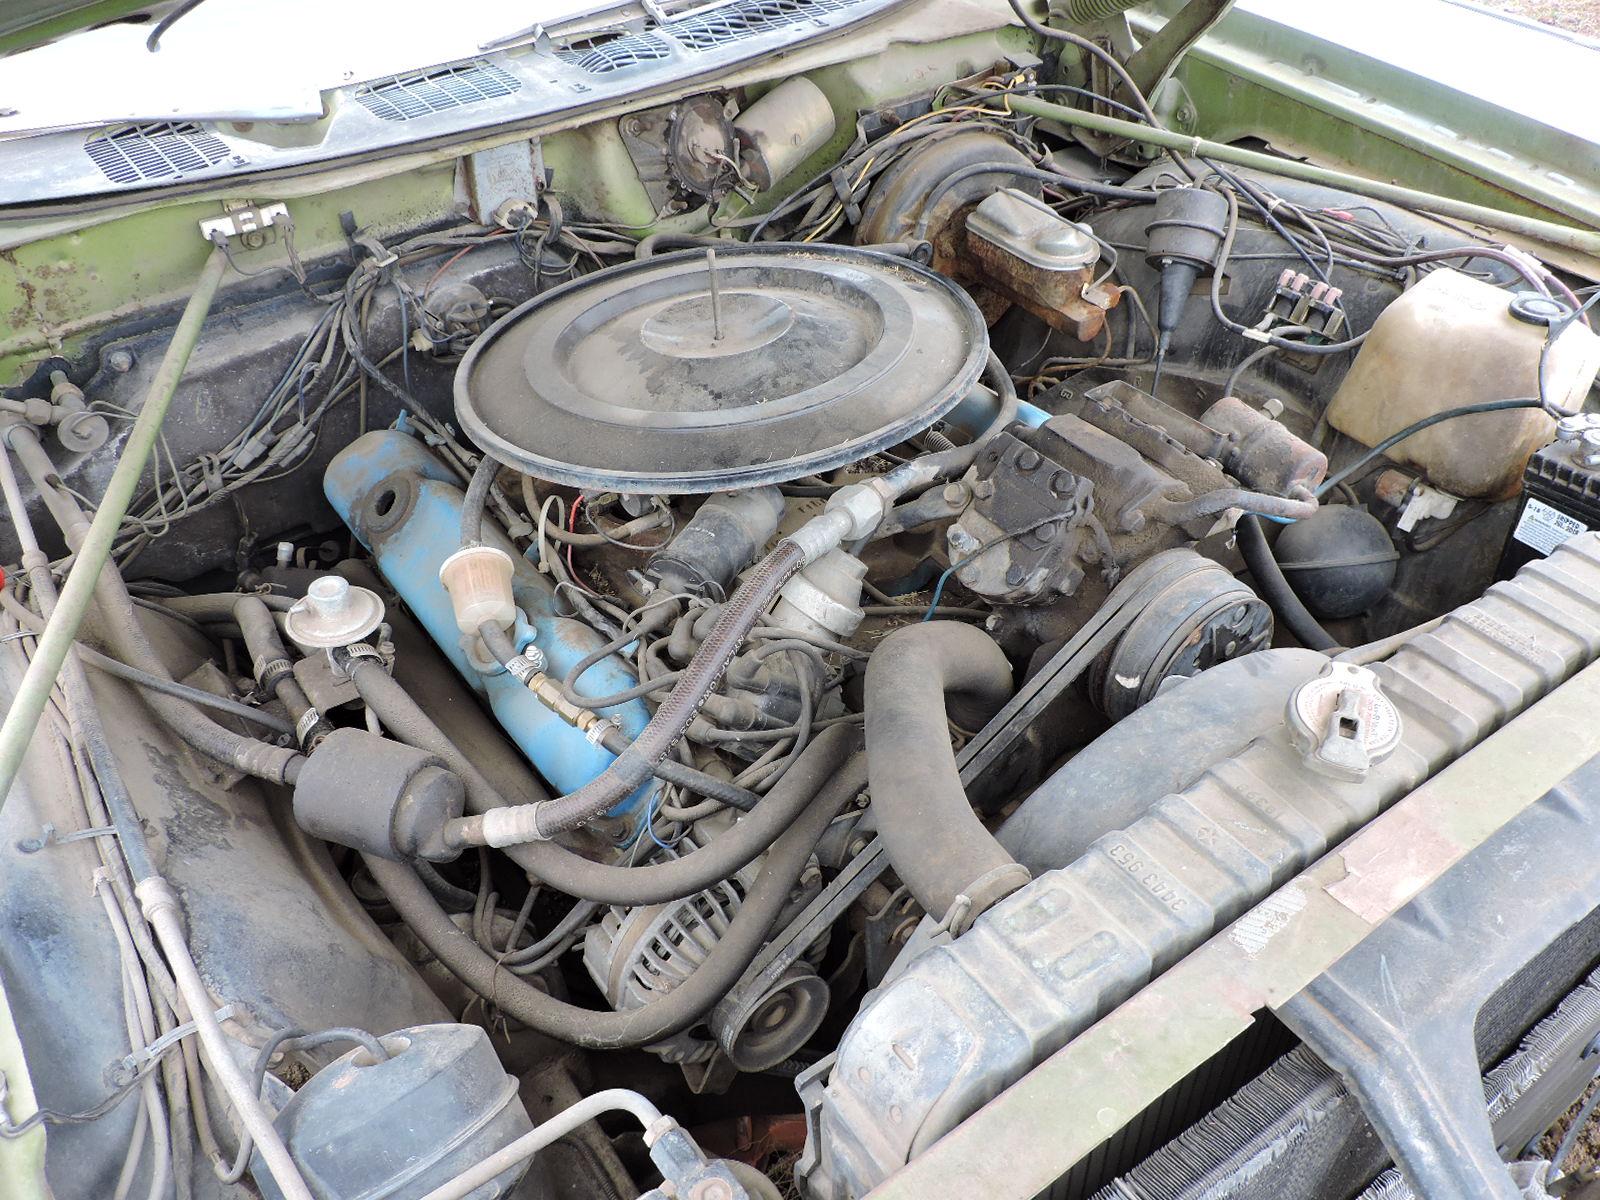 1971 Chrysler New Yorker Sedan - 440ci V8 / with Spare Parts